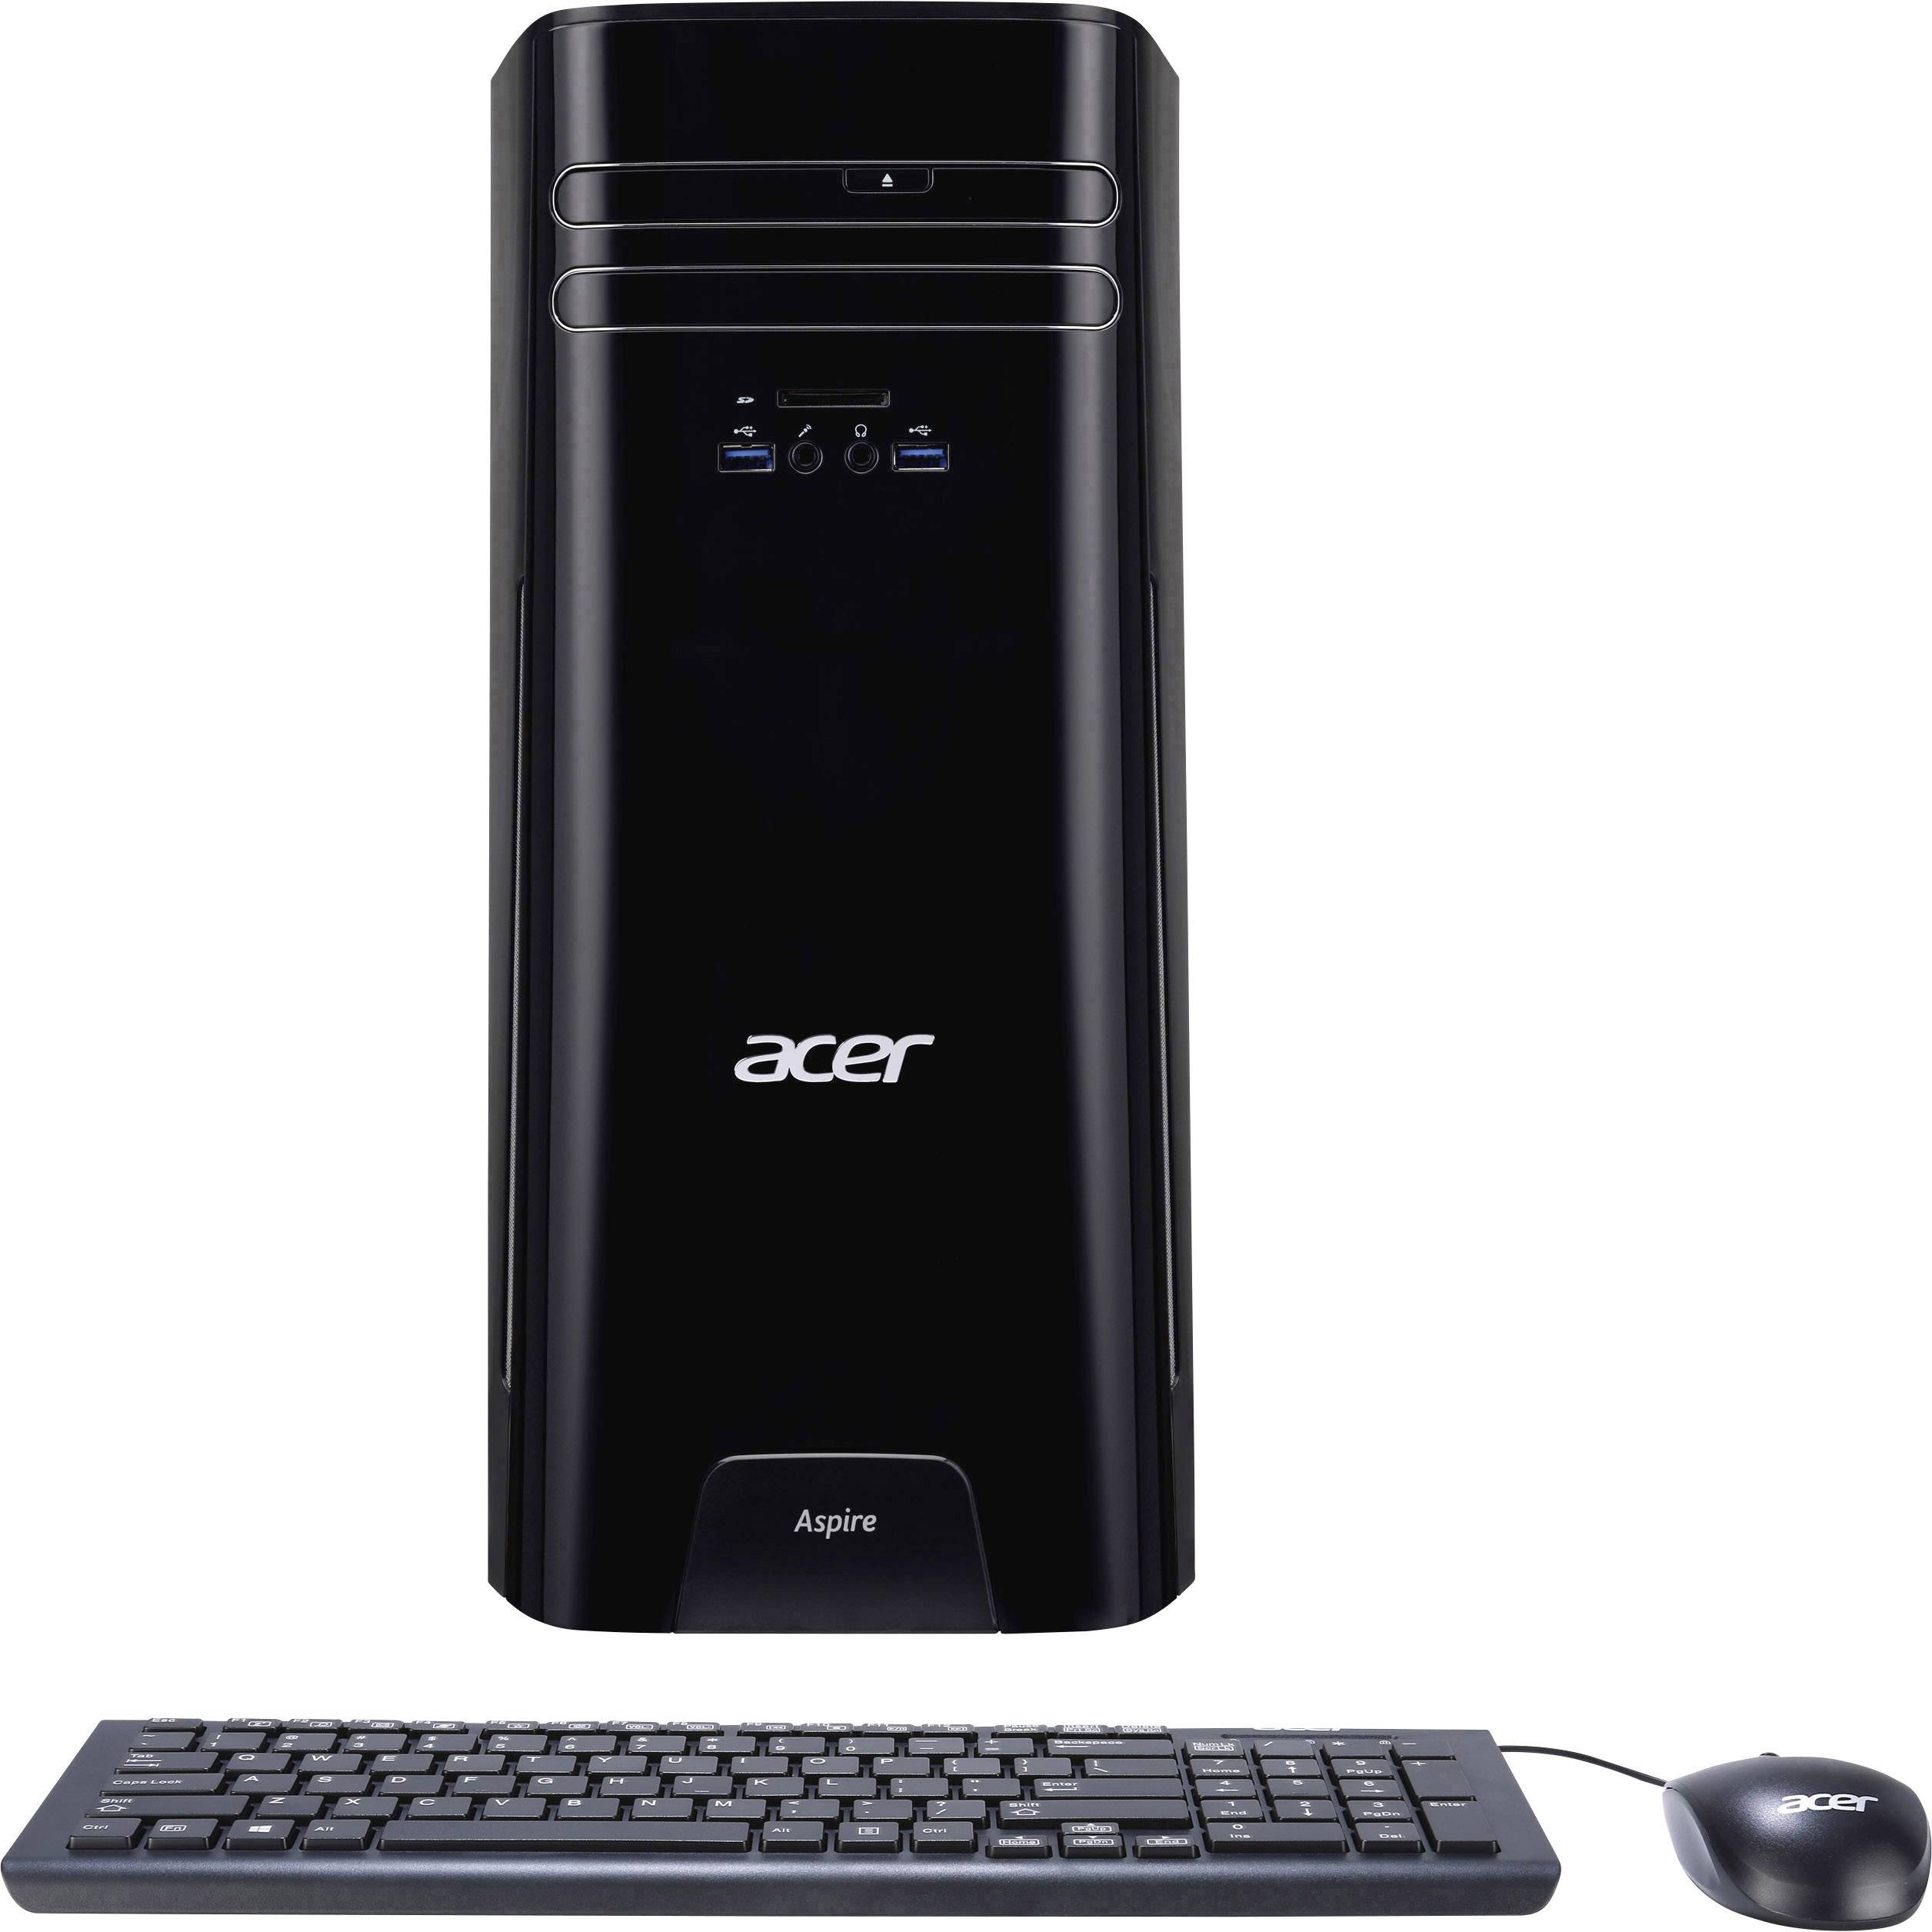 Acer ASPIRE TC-281 A12-9800 31LITER Midi tower PC AMD A12 9800 8 GB 1